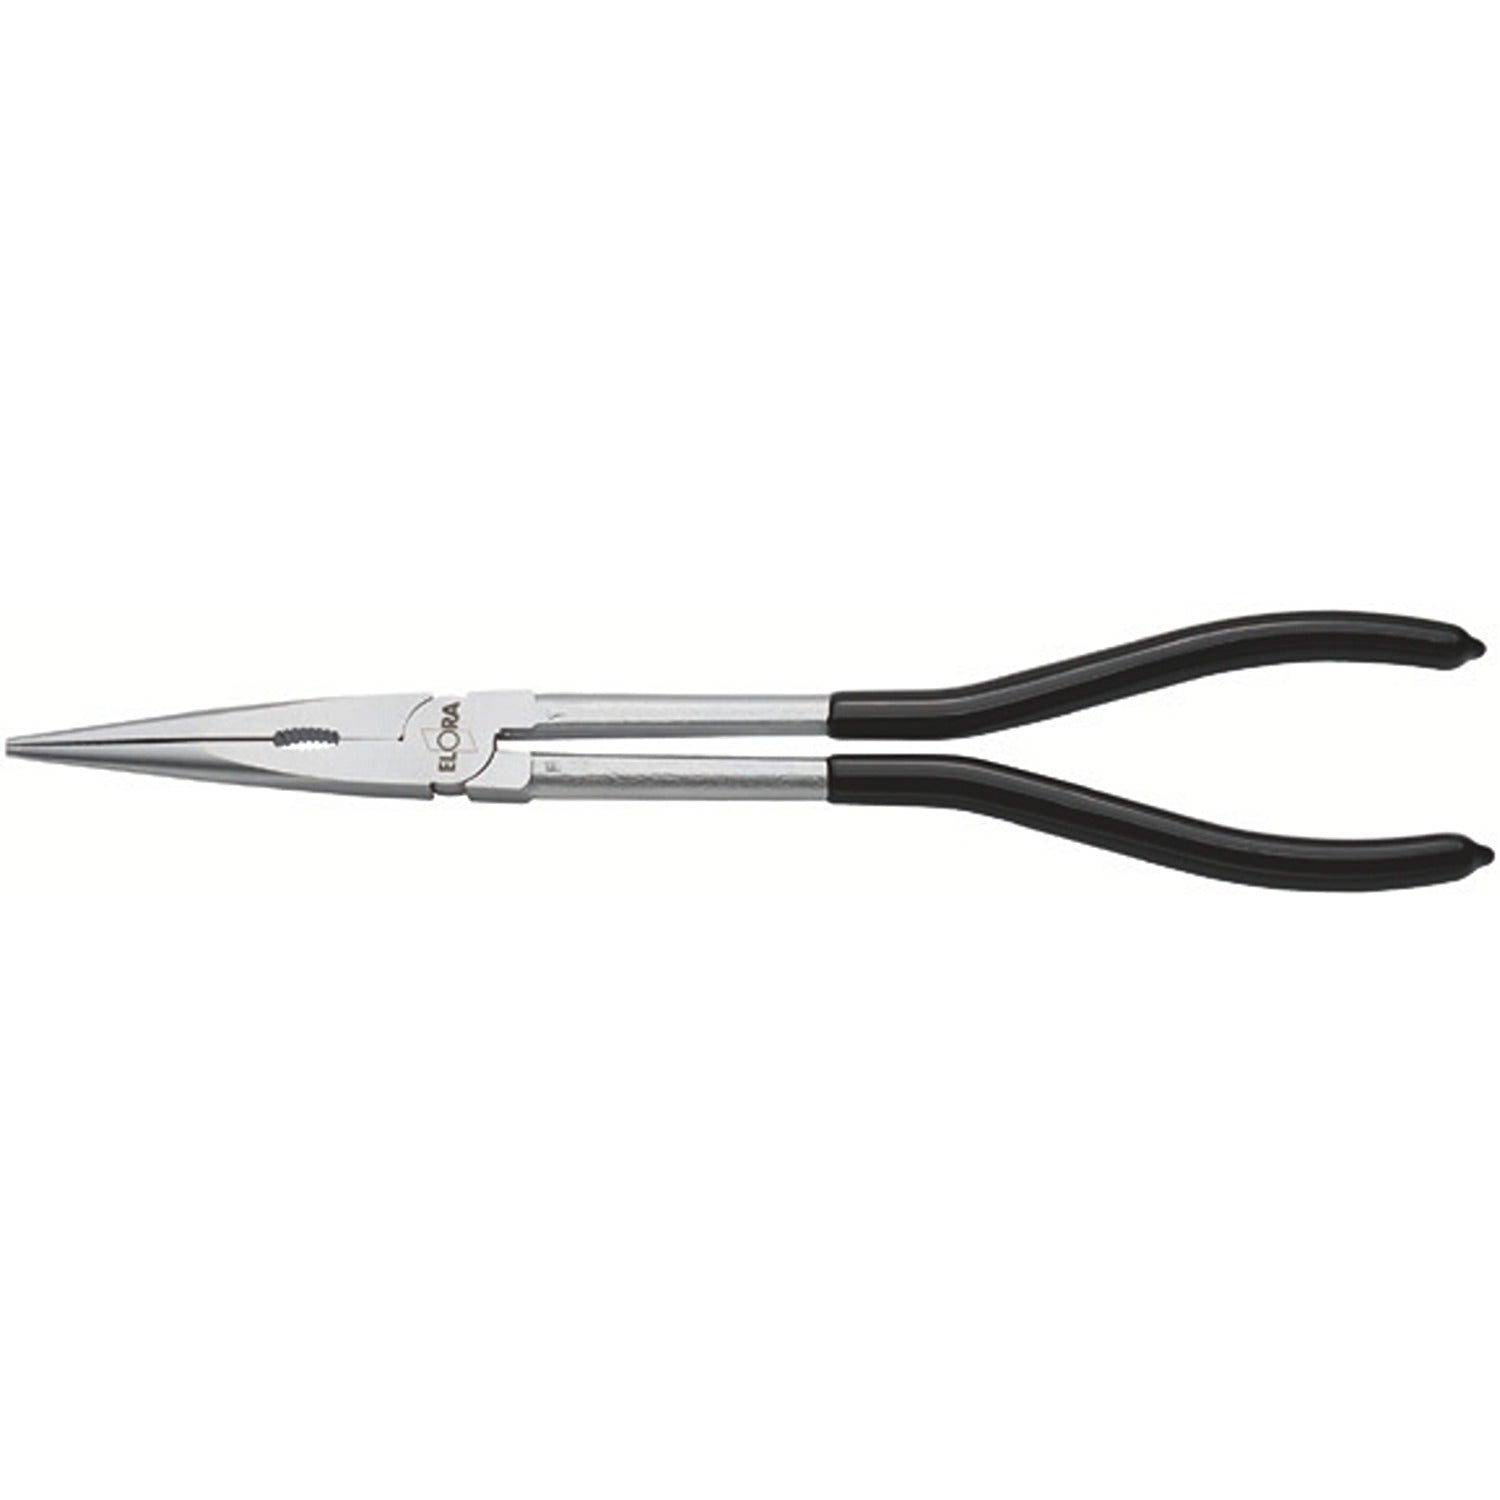 ELORA 374-1 Flat Nose Plier Straight (ELORA Tools) - Premium Flat Nose Plier from ELORA - Shop now at Yew Aik.